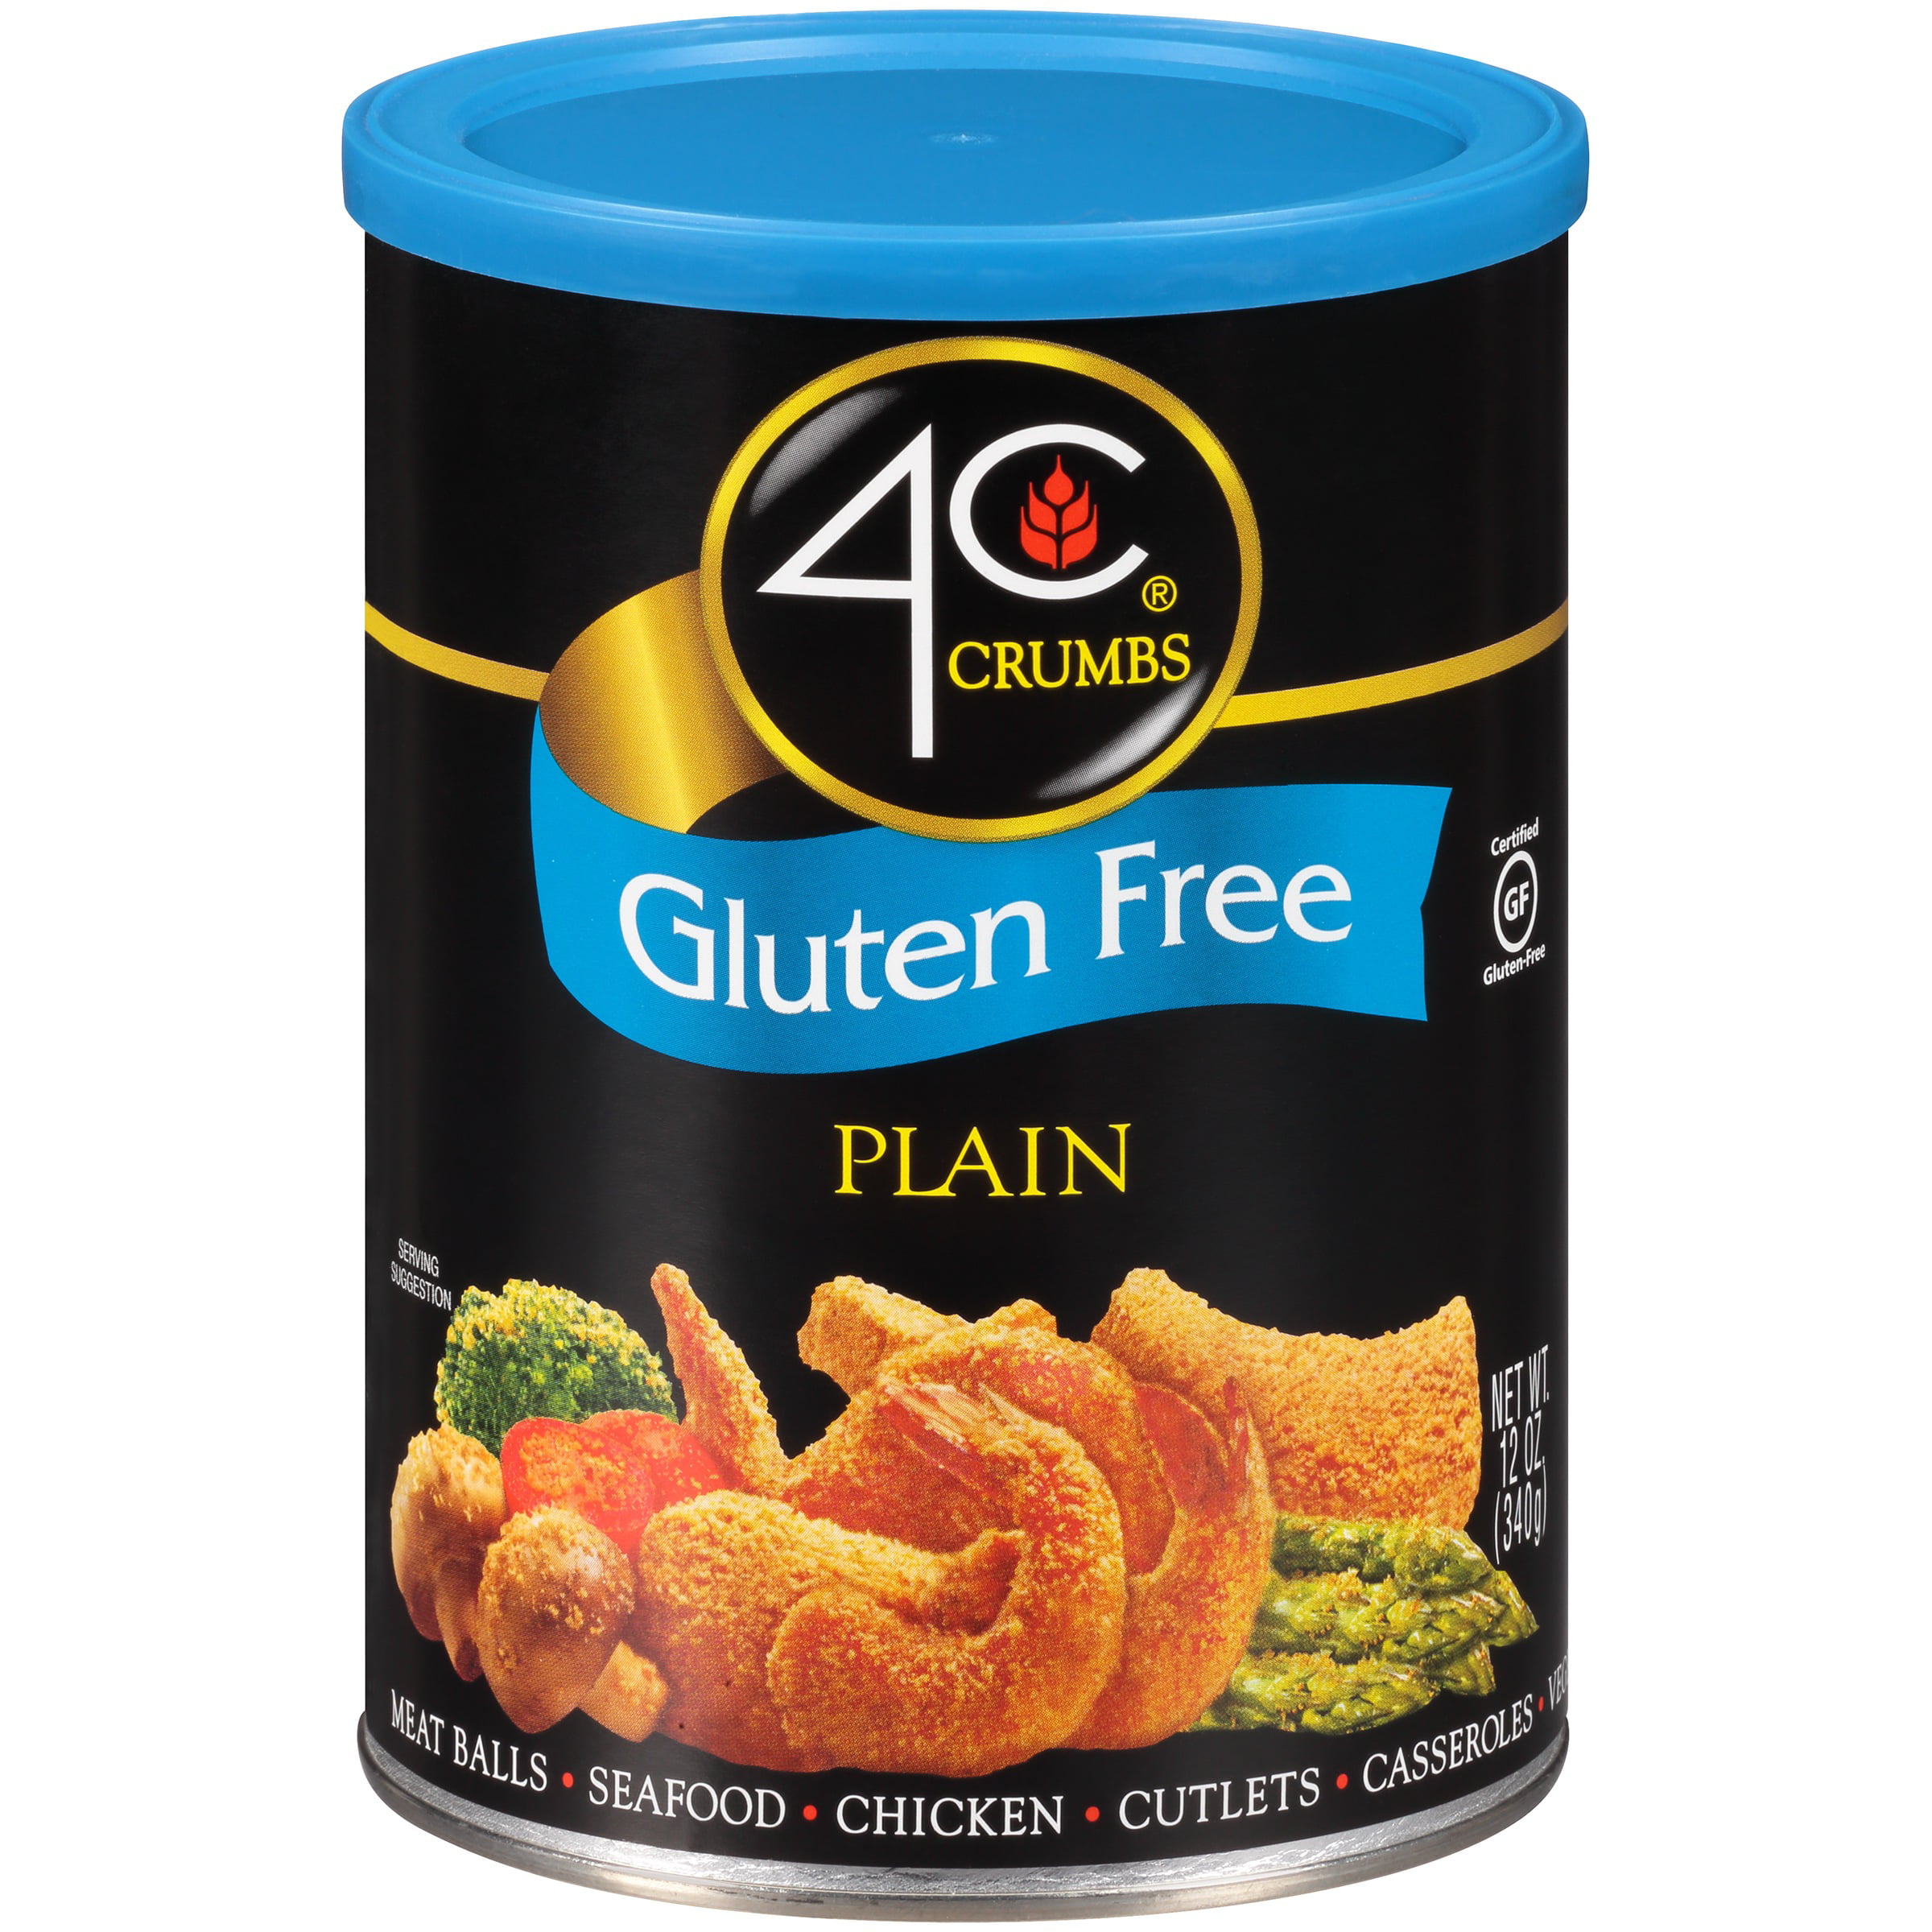 2 Pack) 4C Gluten Free Plain Crumbs 12 oz Canister - Walmart.com